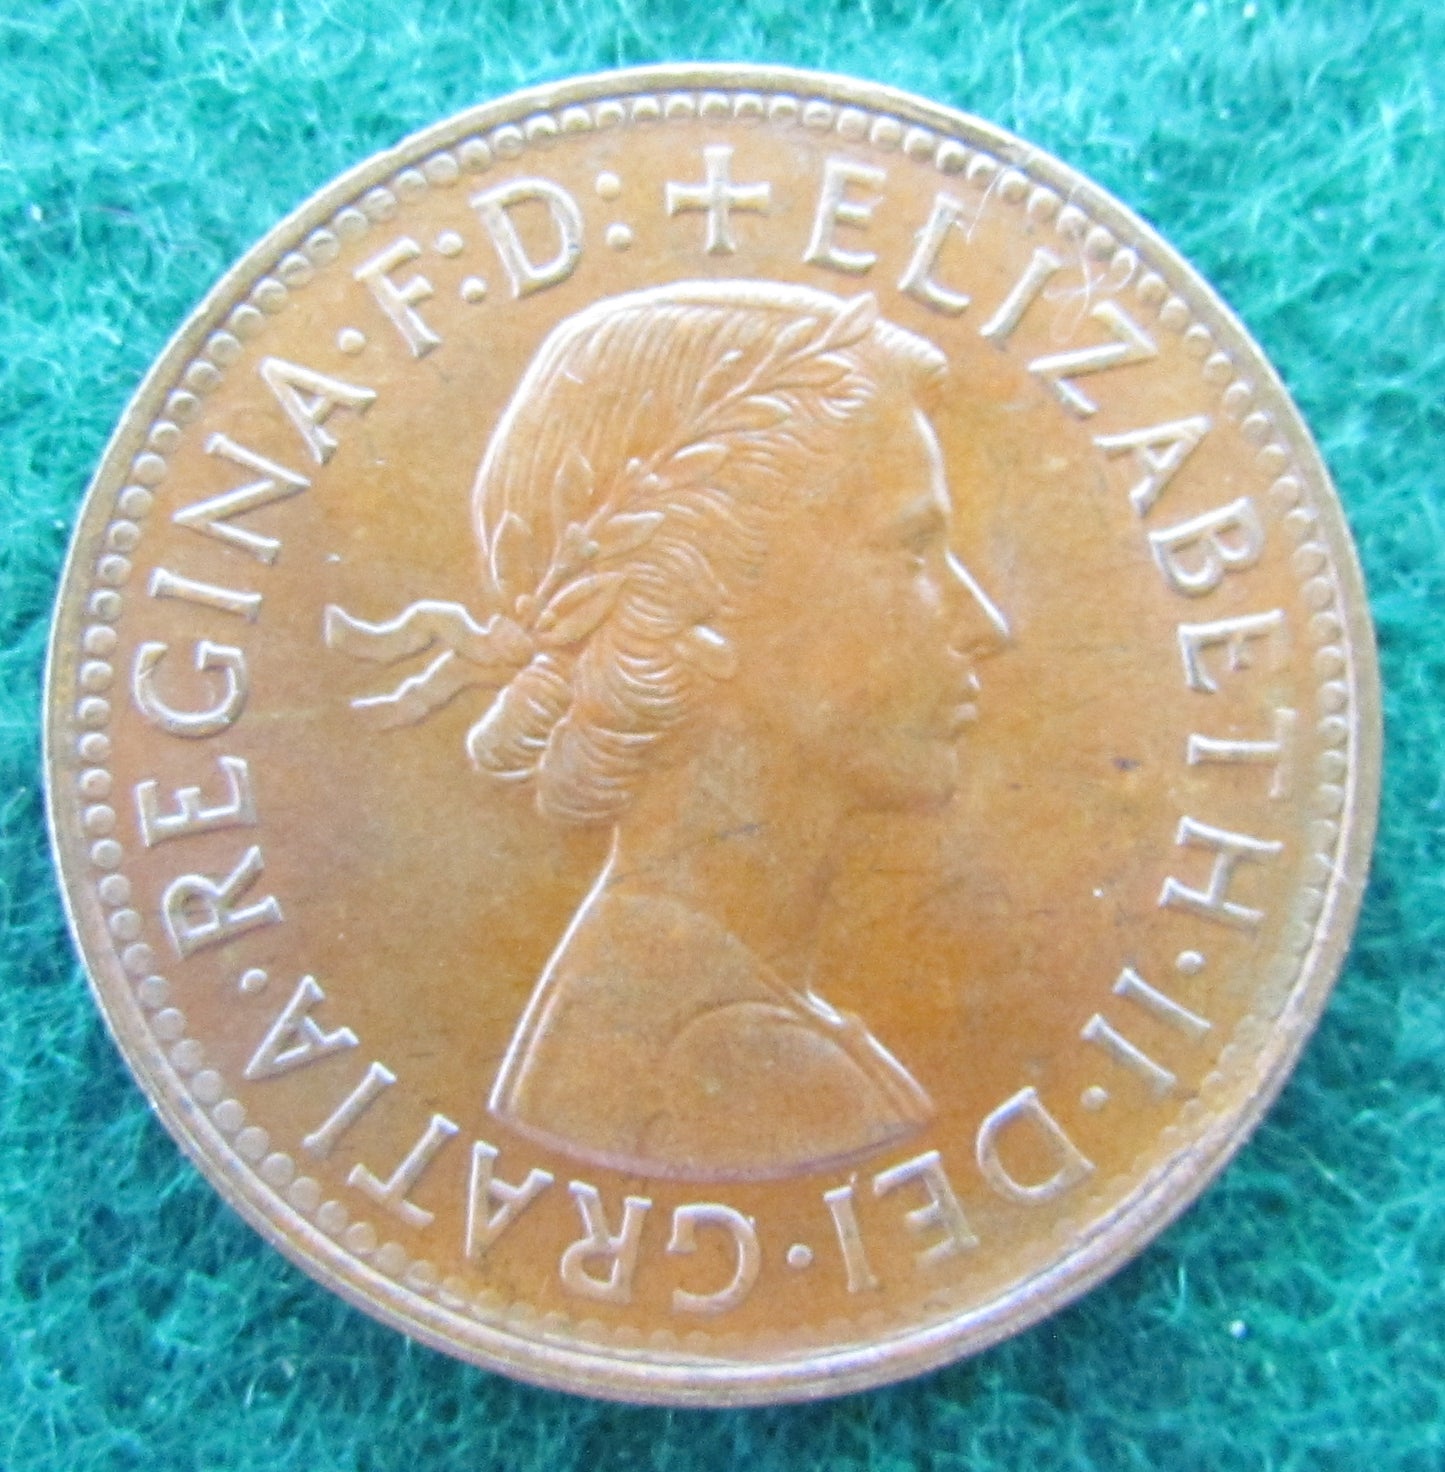 Australian 1961 Y. 1/2d Half Penny Queen Elizabeth II Coin